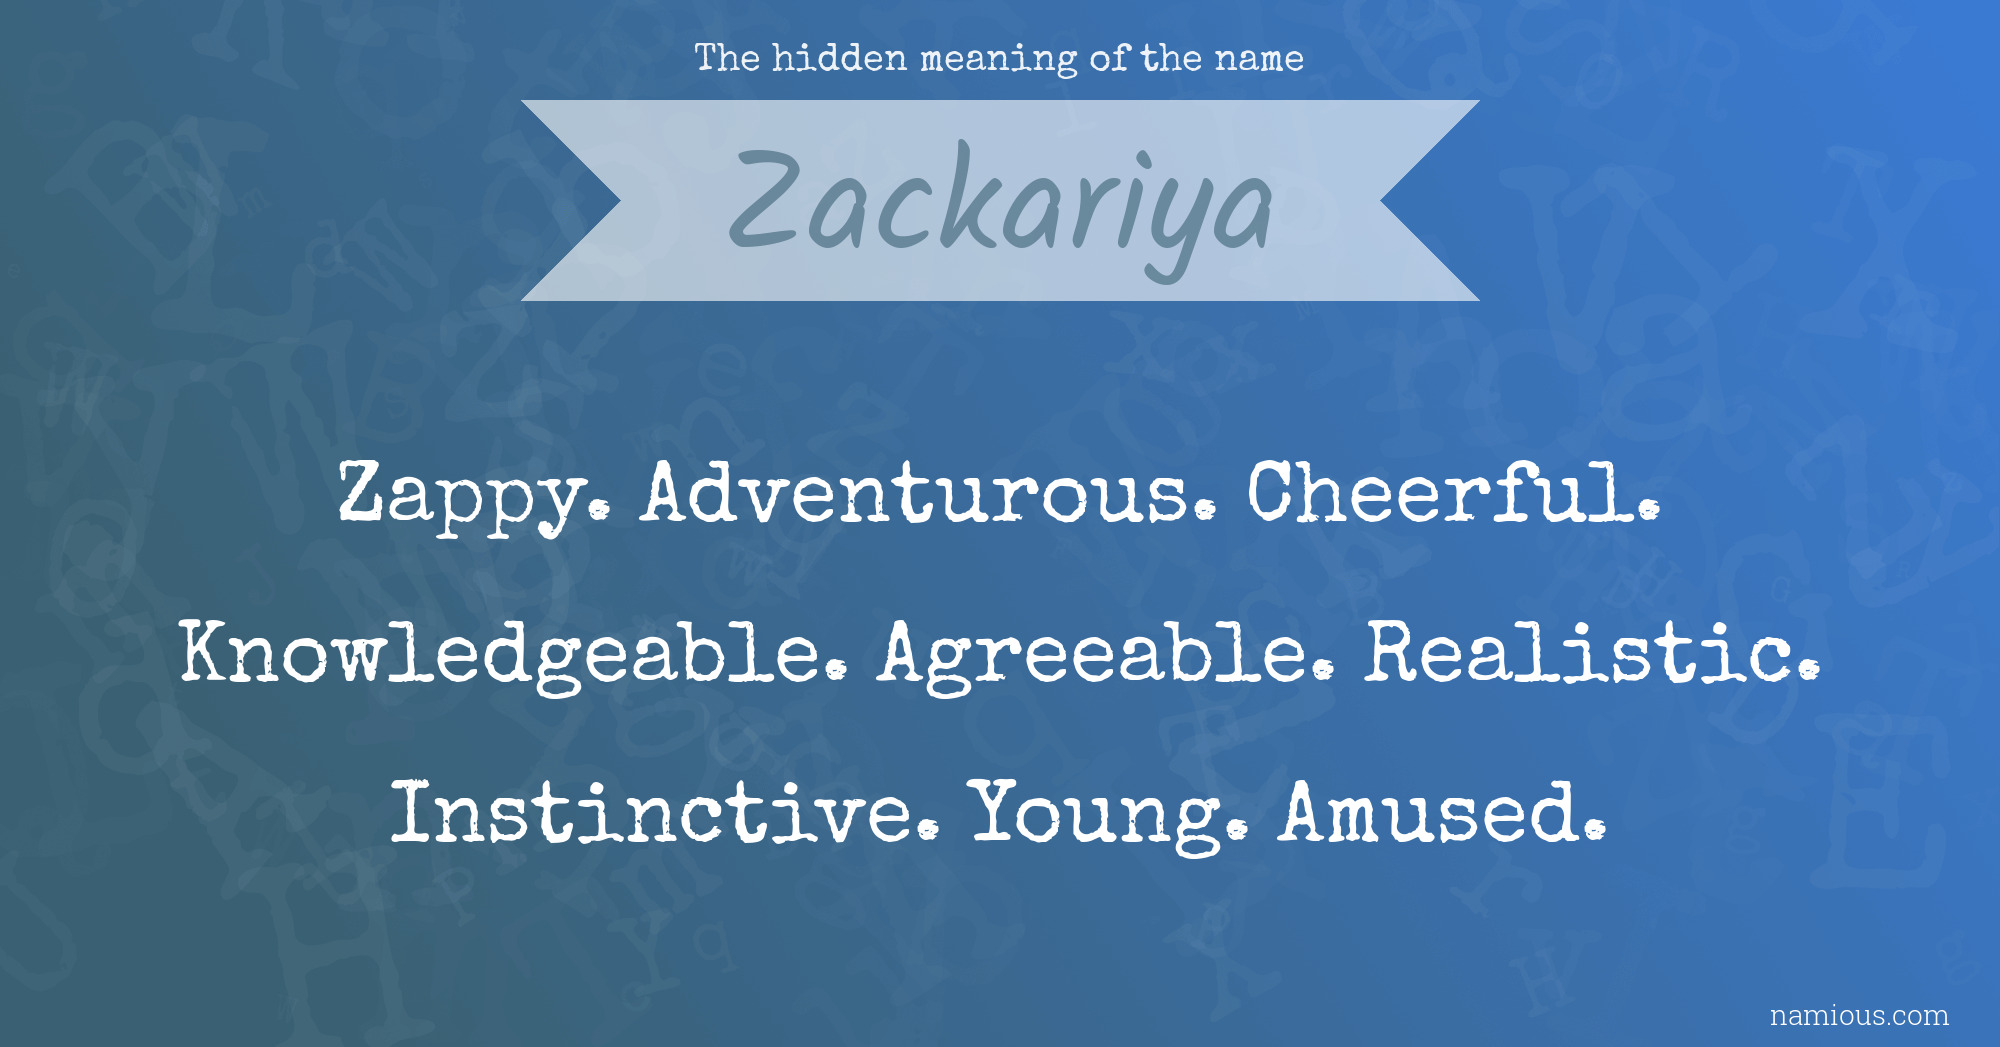 The hidden meaning of the name Zackariya